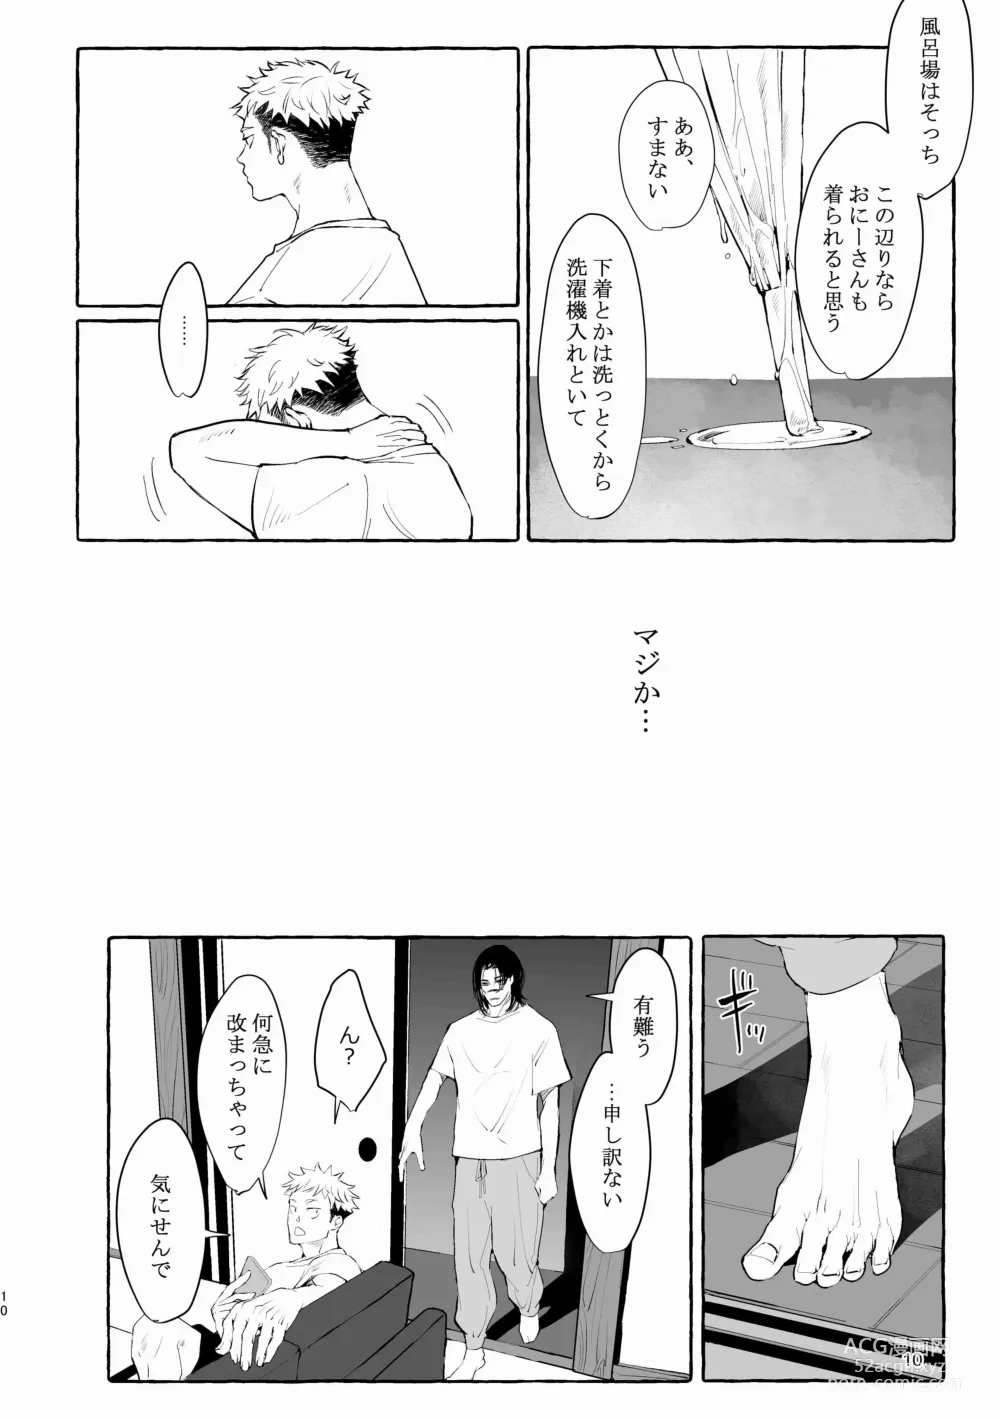 Page 10 of doujinshi Inryoku no Petrichor